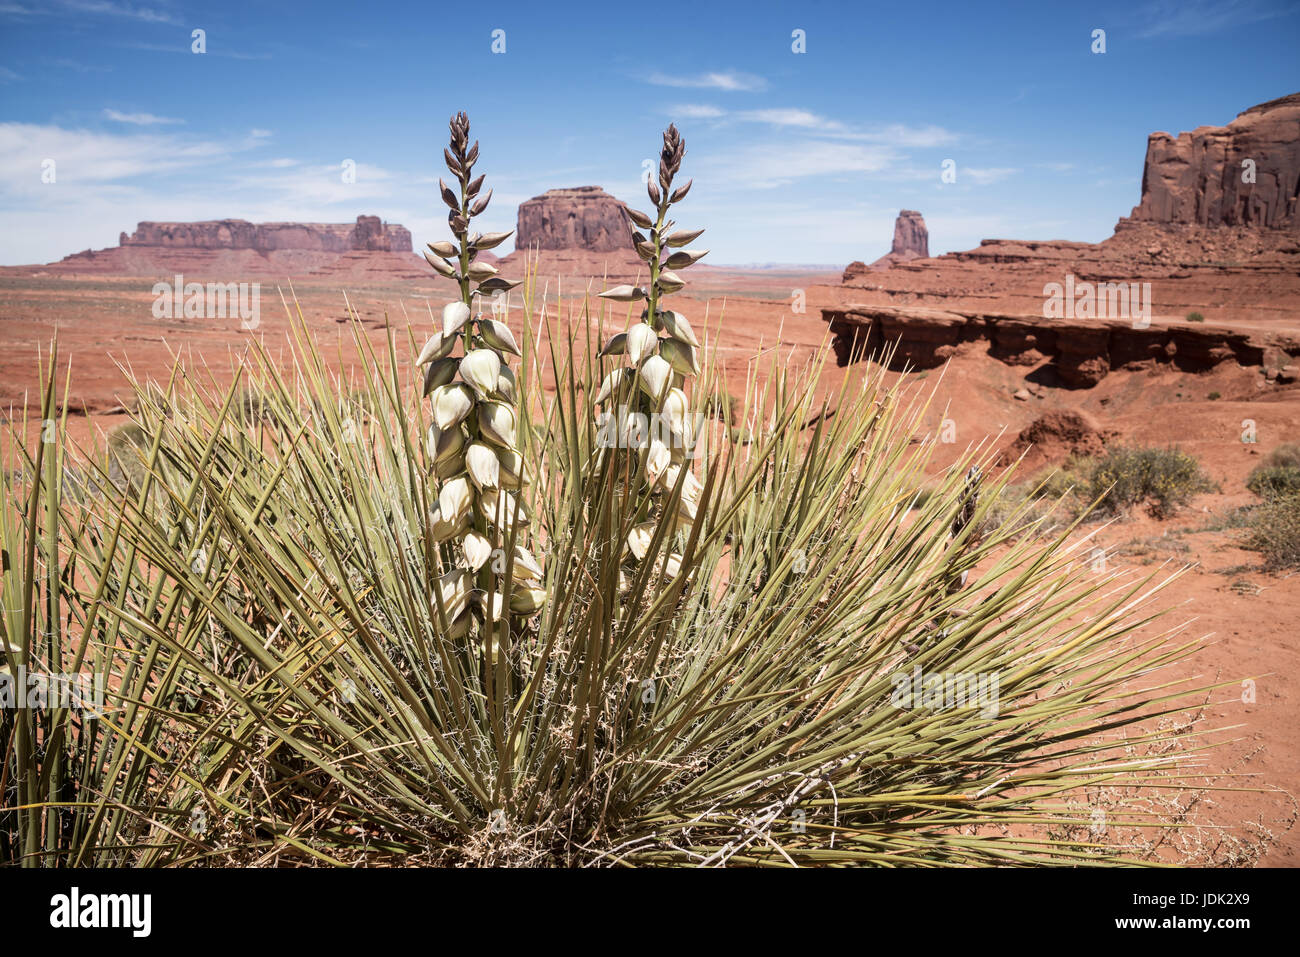 Monument Valley landscape with bizarre desert plants, Utah, USA Stock Photo